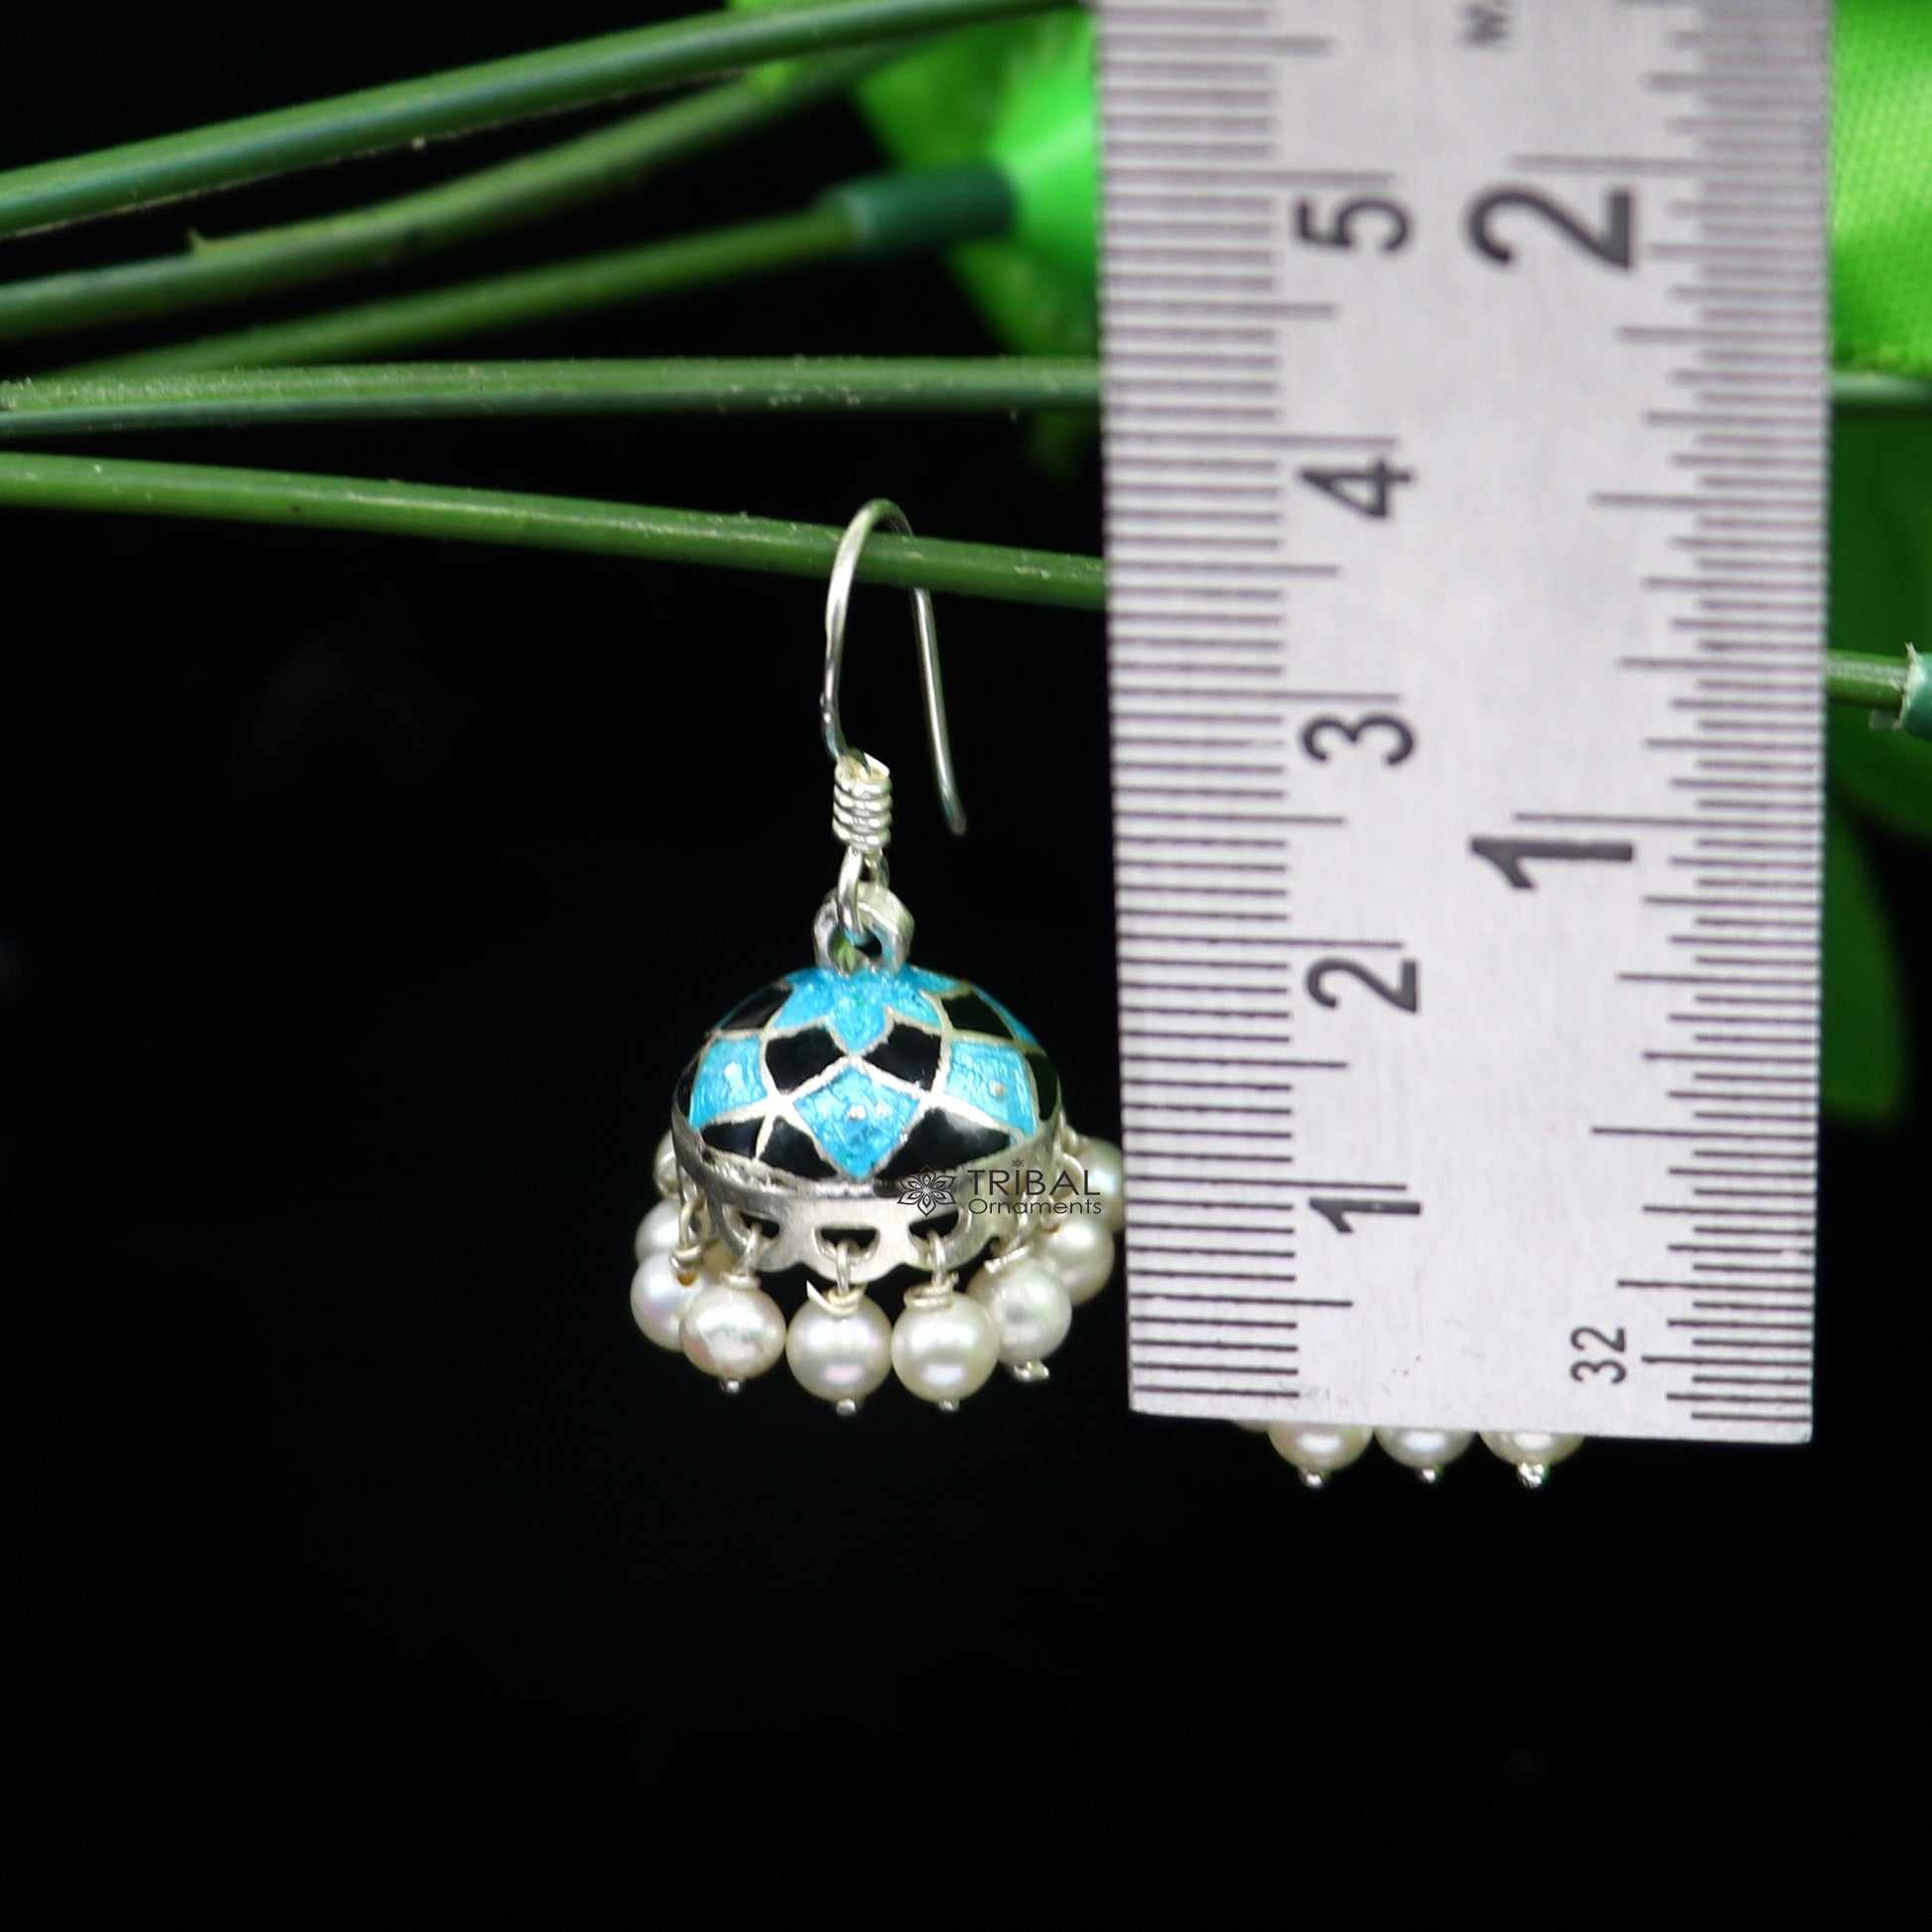 Trendy stylish  925 sterling silver Stylish colorful hoops earring chandelier, enamel work jhumka hanging drops brides earrings  s1190 - TRIBAL ORNAMENTS